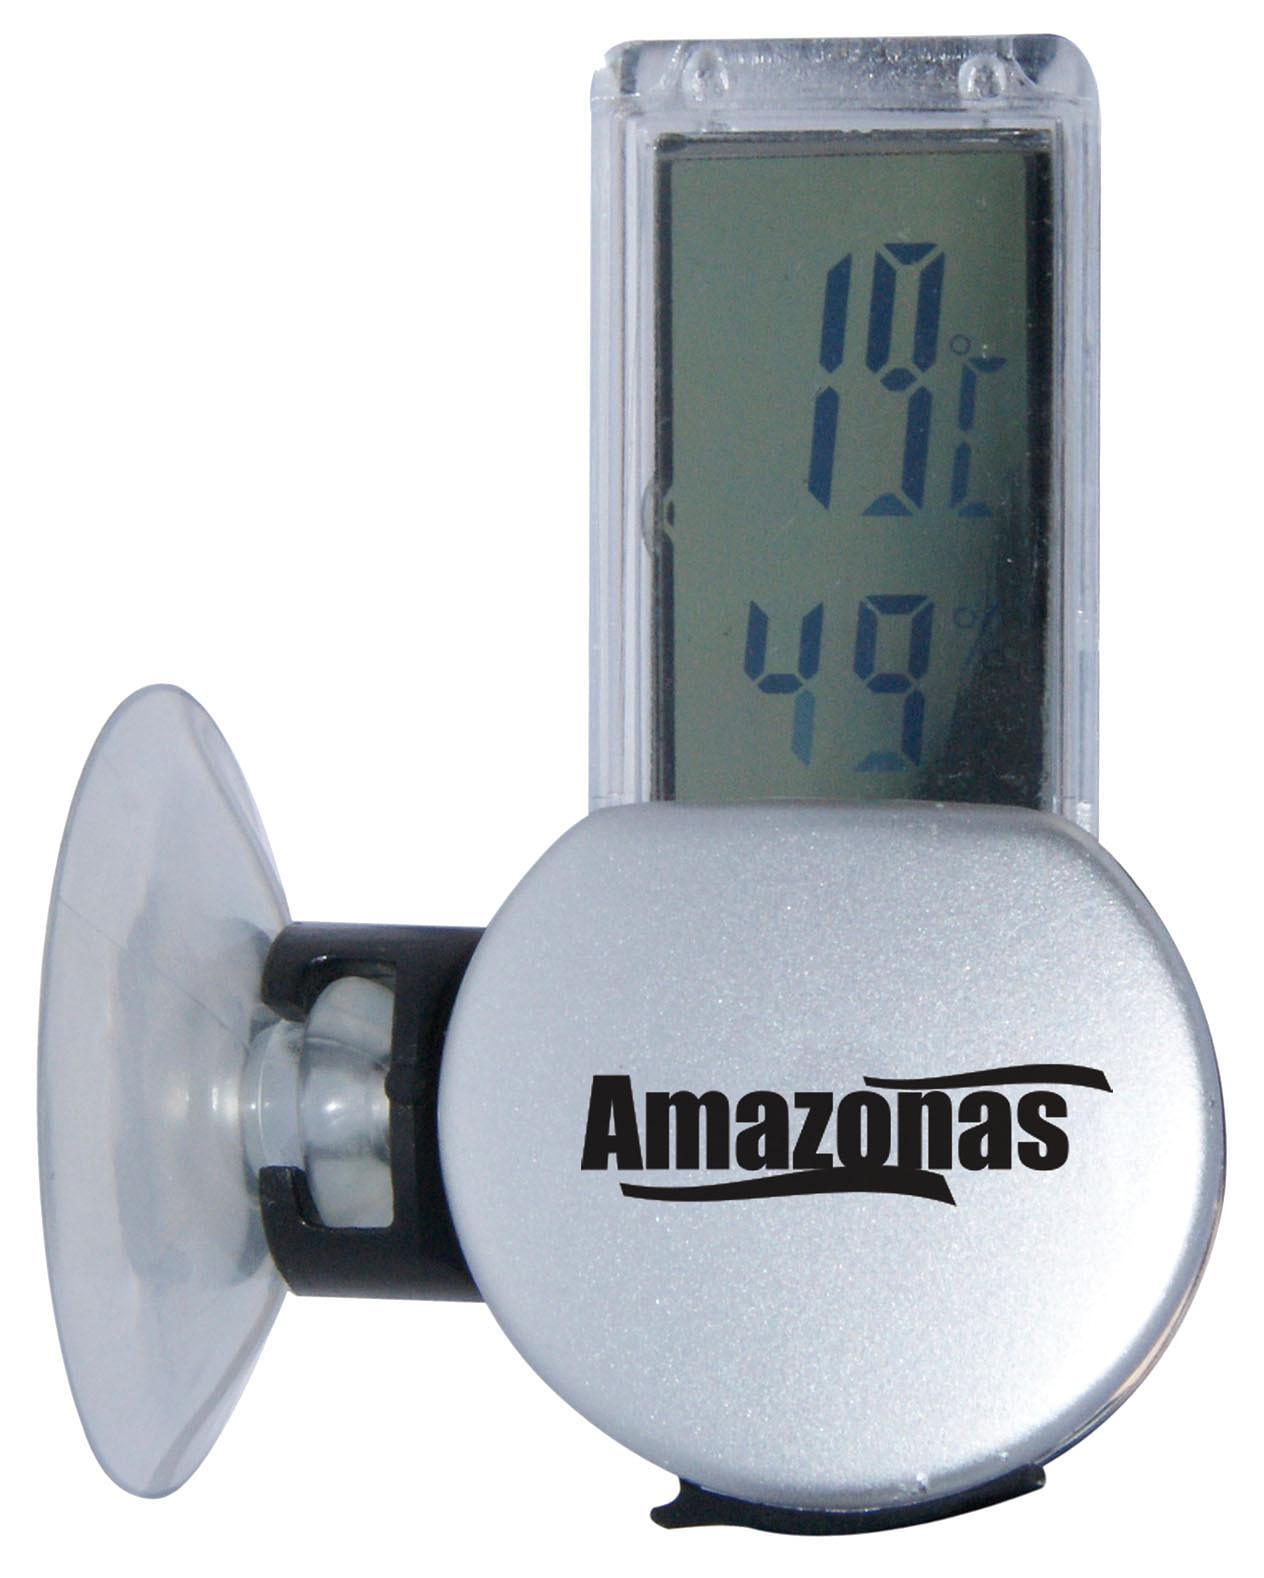 Amazonas Repti Meter Mini, Thermomètre digitale